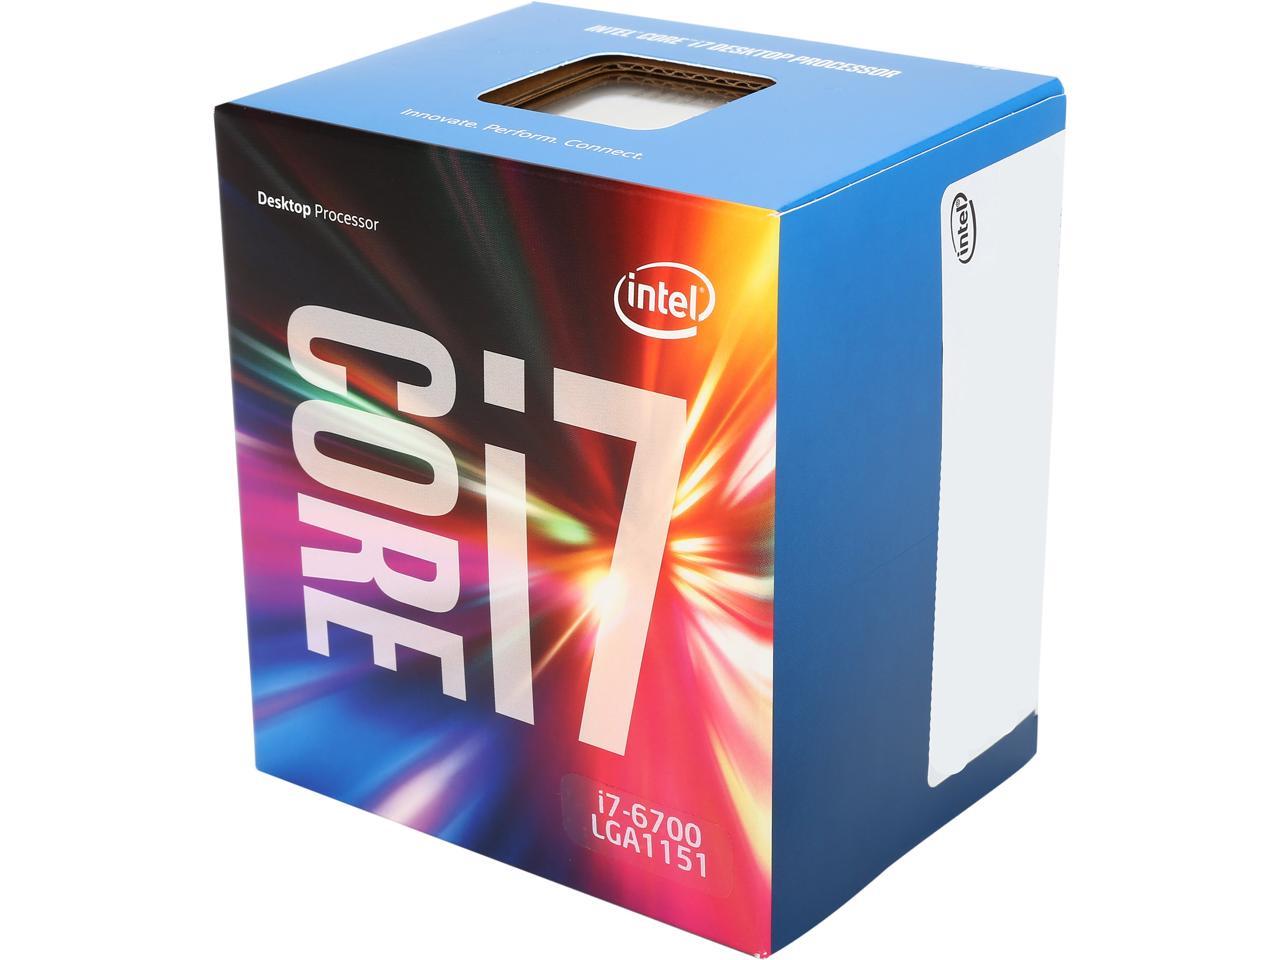 PC/タブレット PCパーツ Intel Core i7 6th Gen - Core i7-6700 Skylake Quad-Core 3.4 GHz LGA 1151 65W  BX80662I76700 Desktop Processor